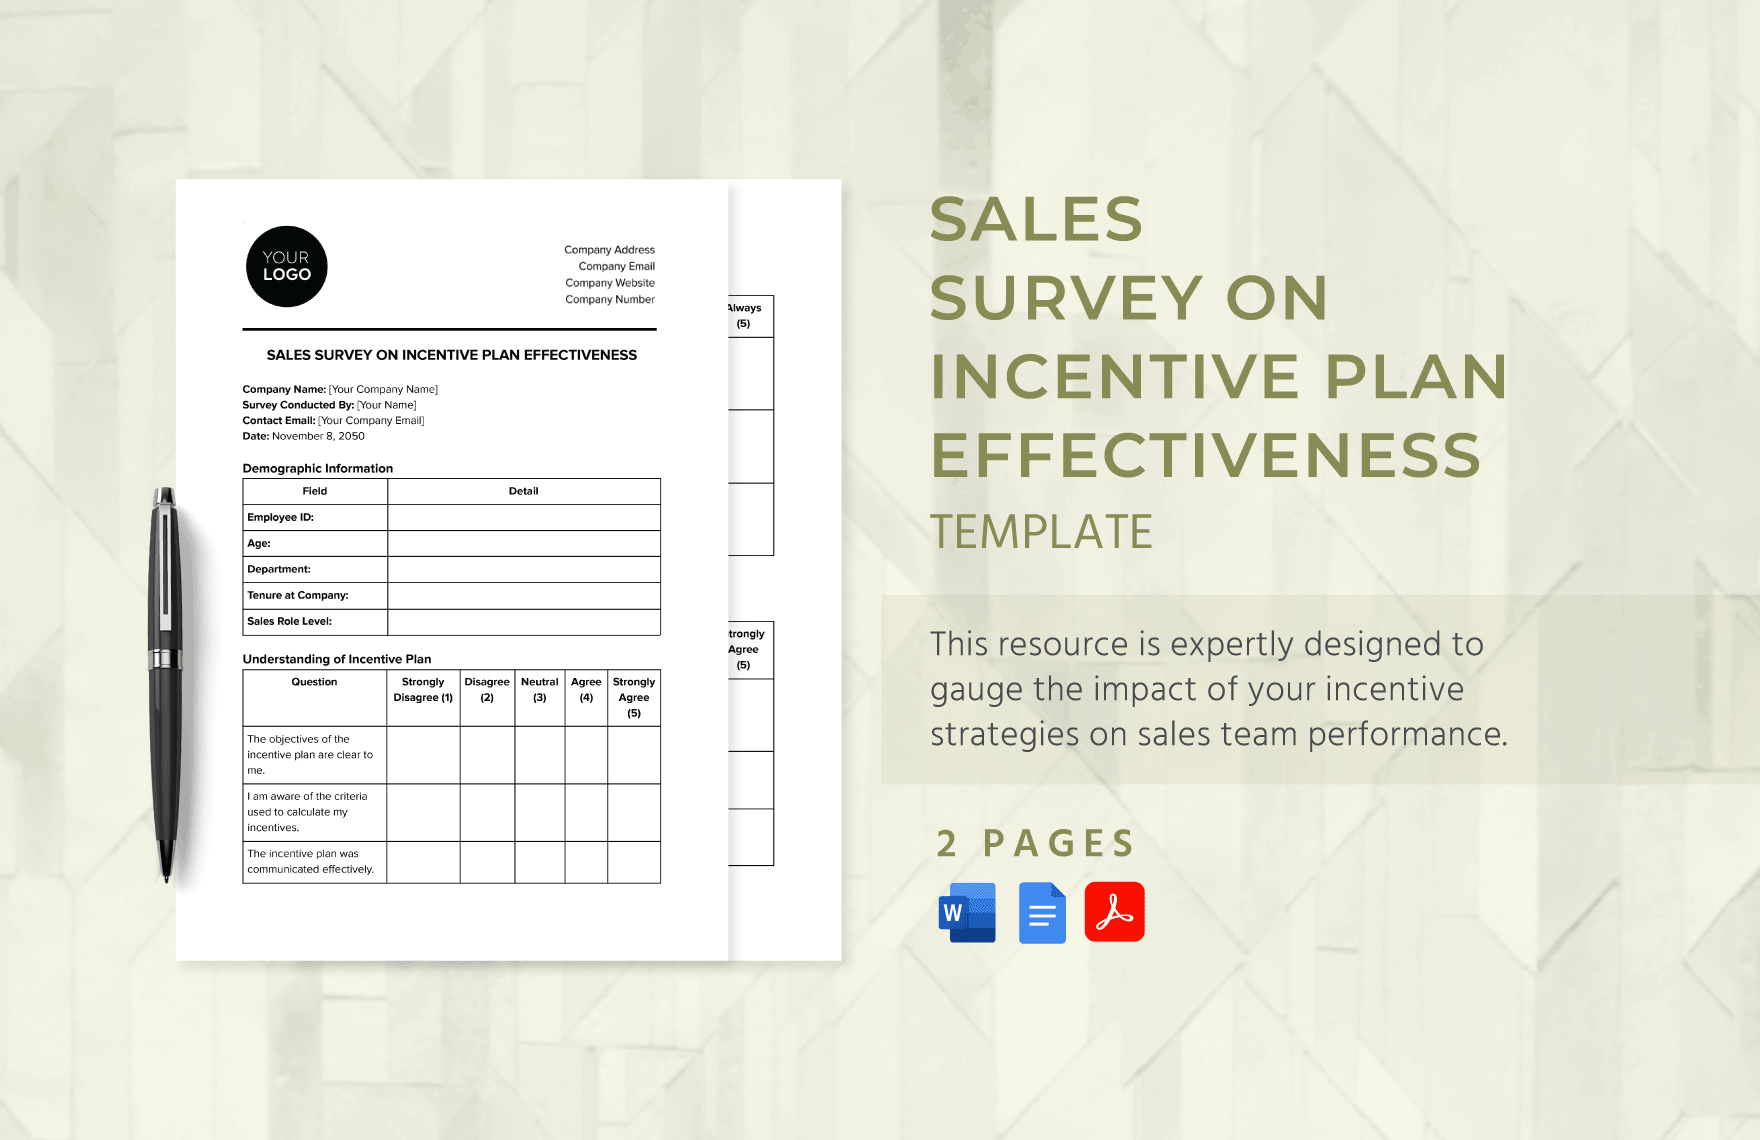 Sales Survey on Incentive Plan Effectiveness Template